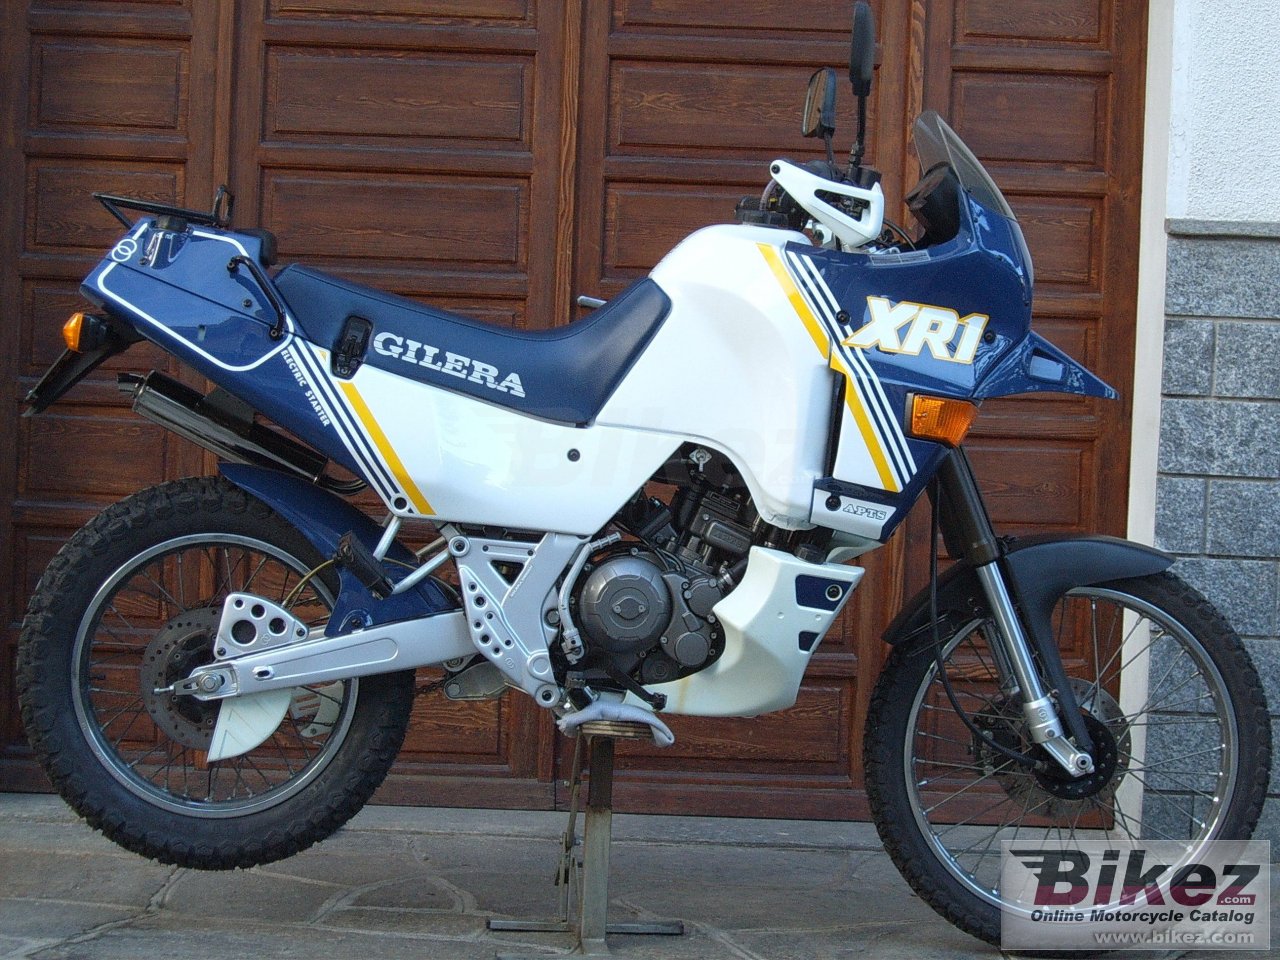 Gilera XR1-125